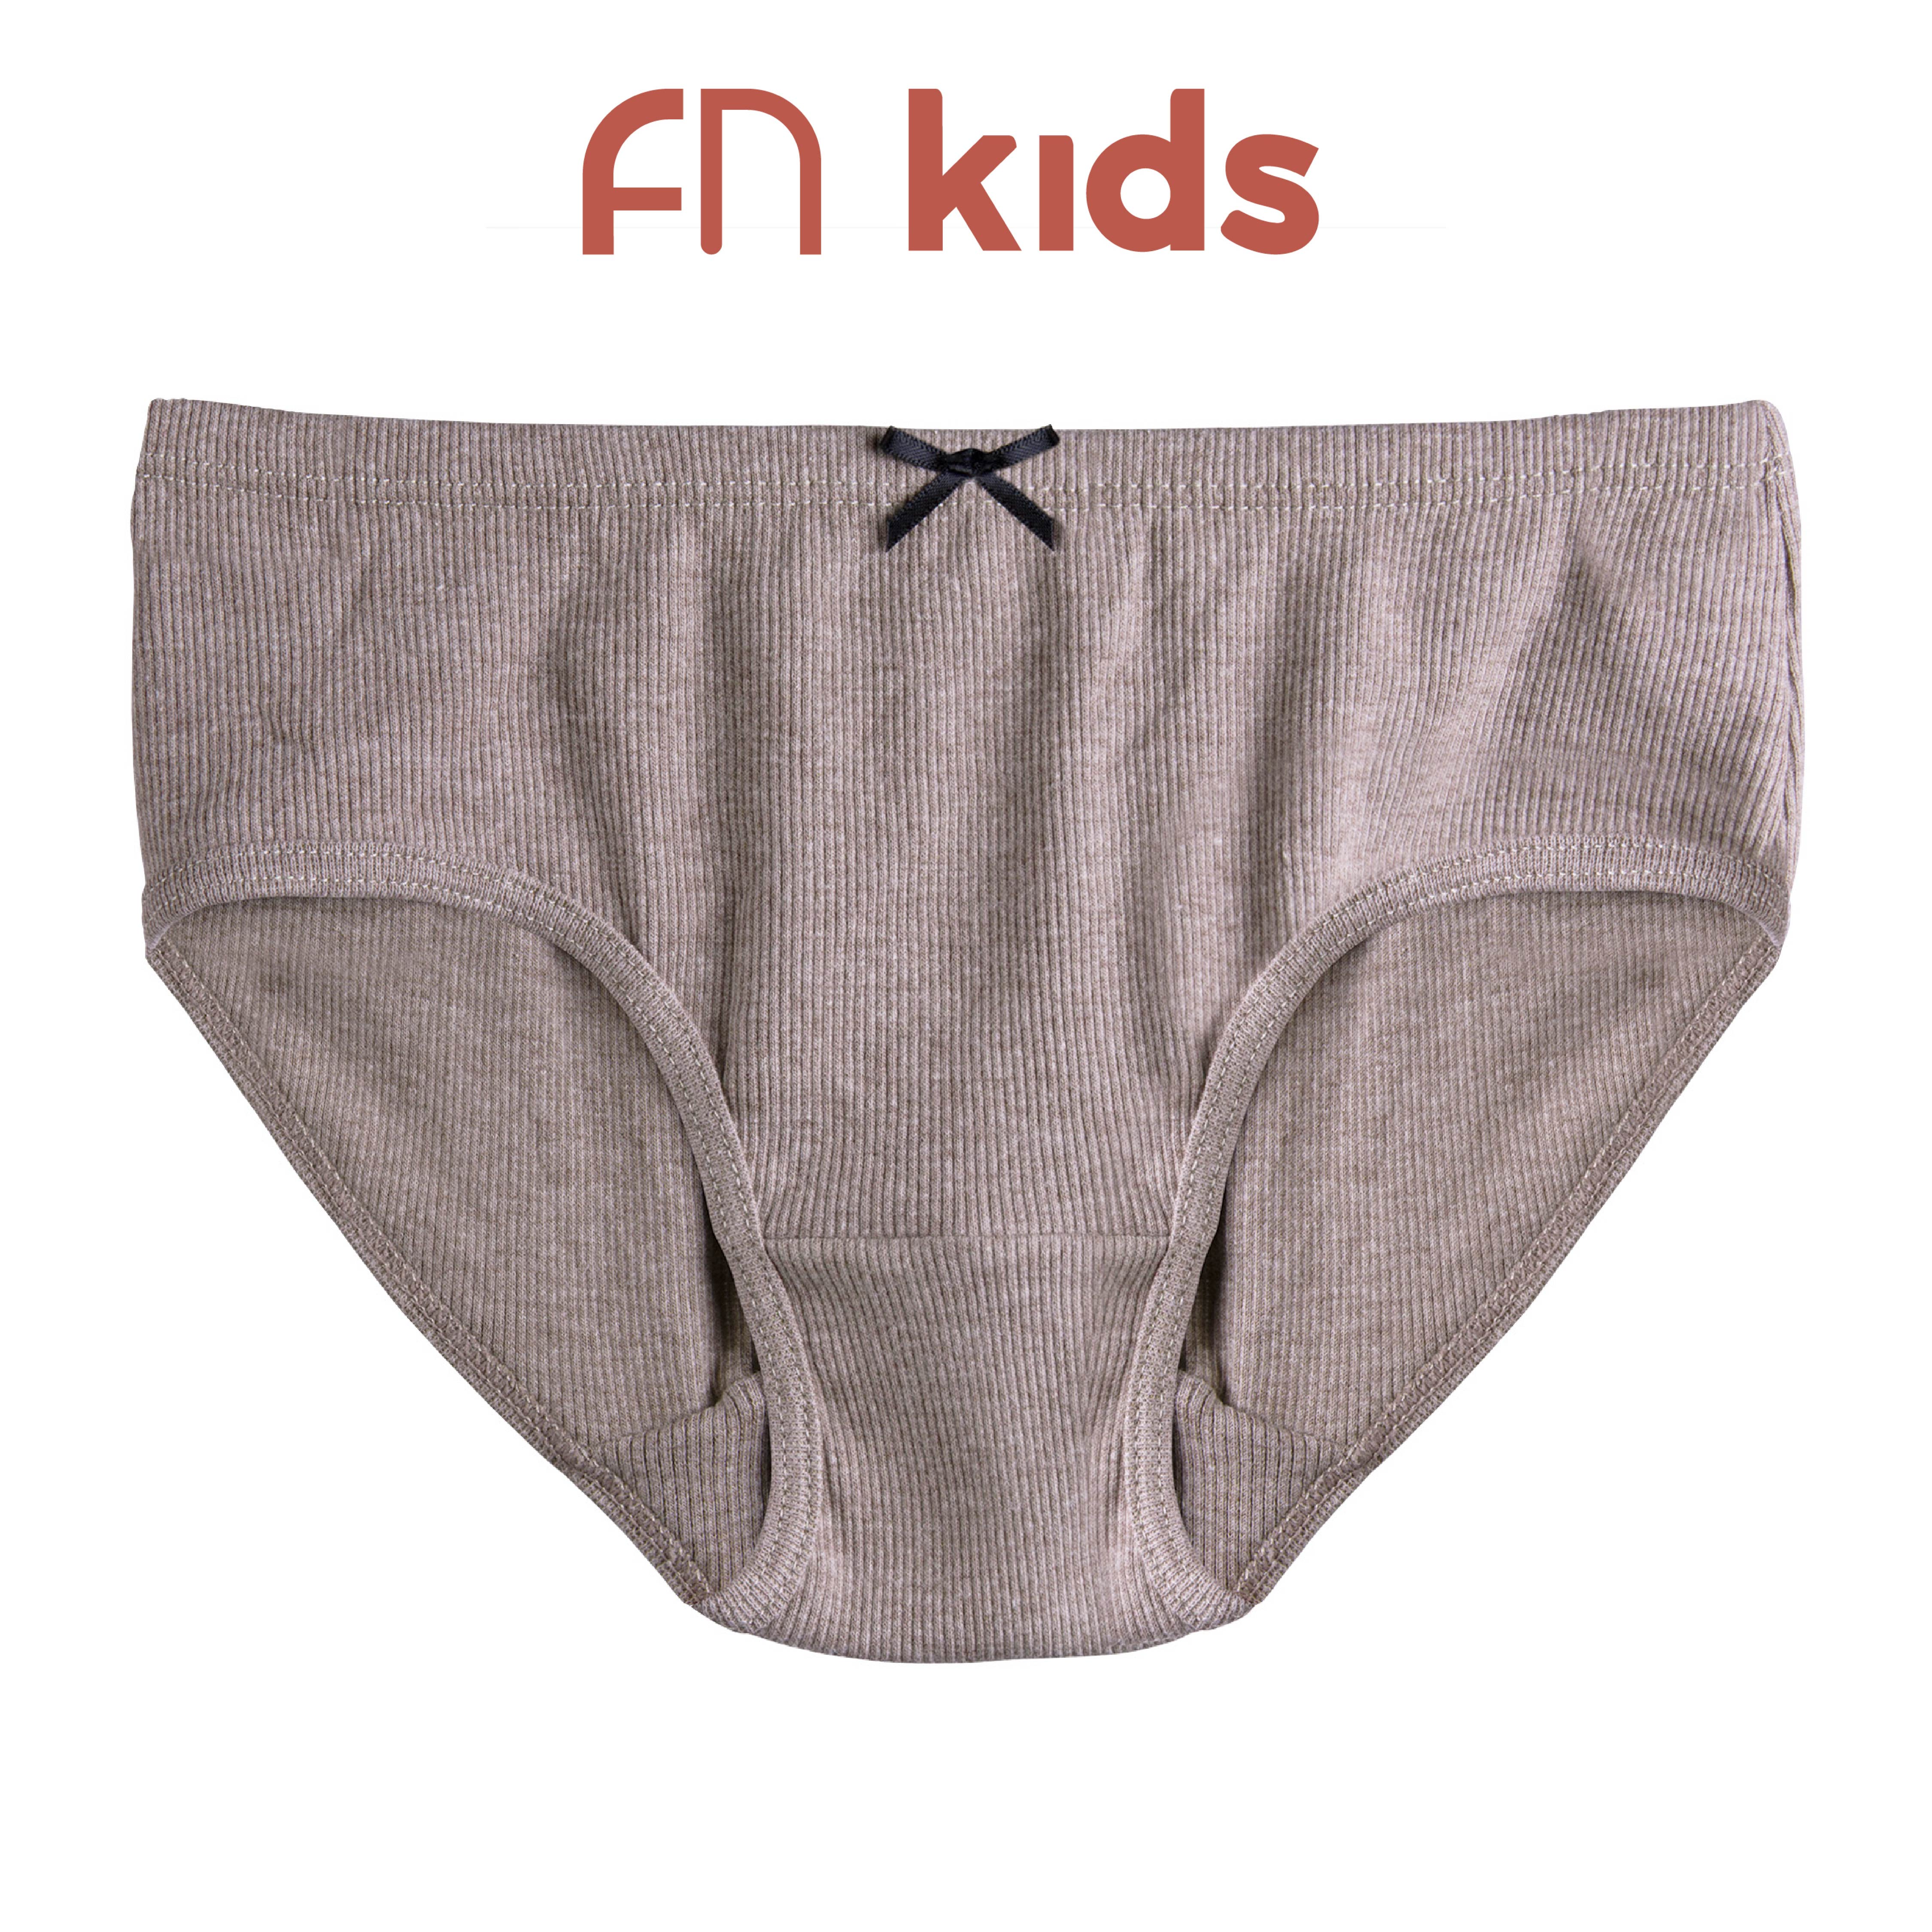 FN Kids Celana Dalam Anak Perempuan Katun Rib Clana Dalam Anak Cewek 1 Pcs NTKC 3421